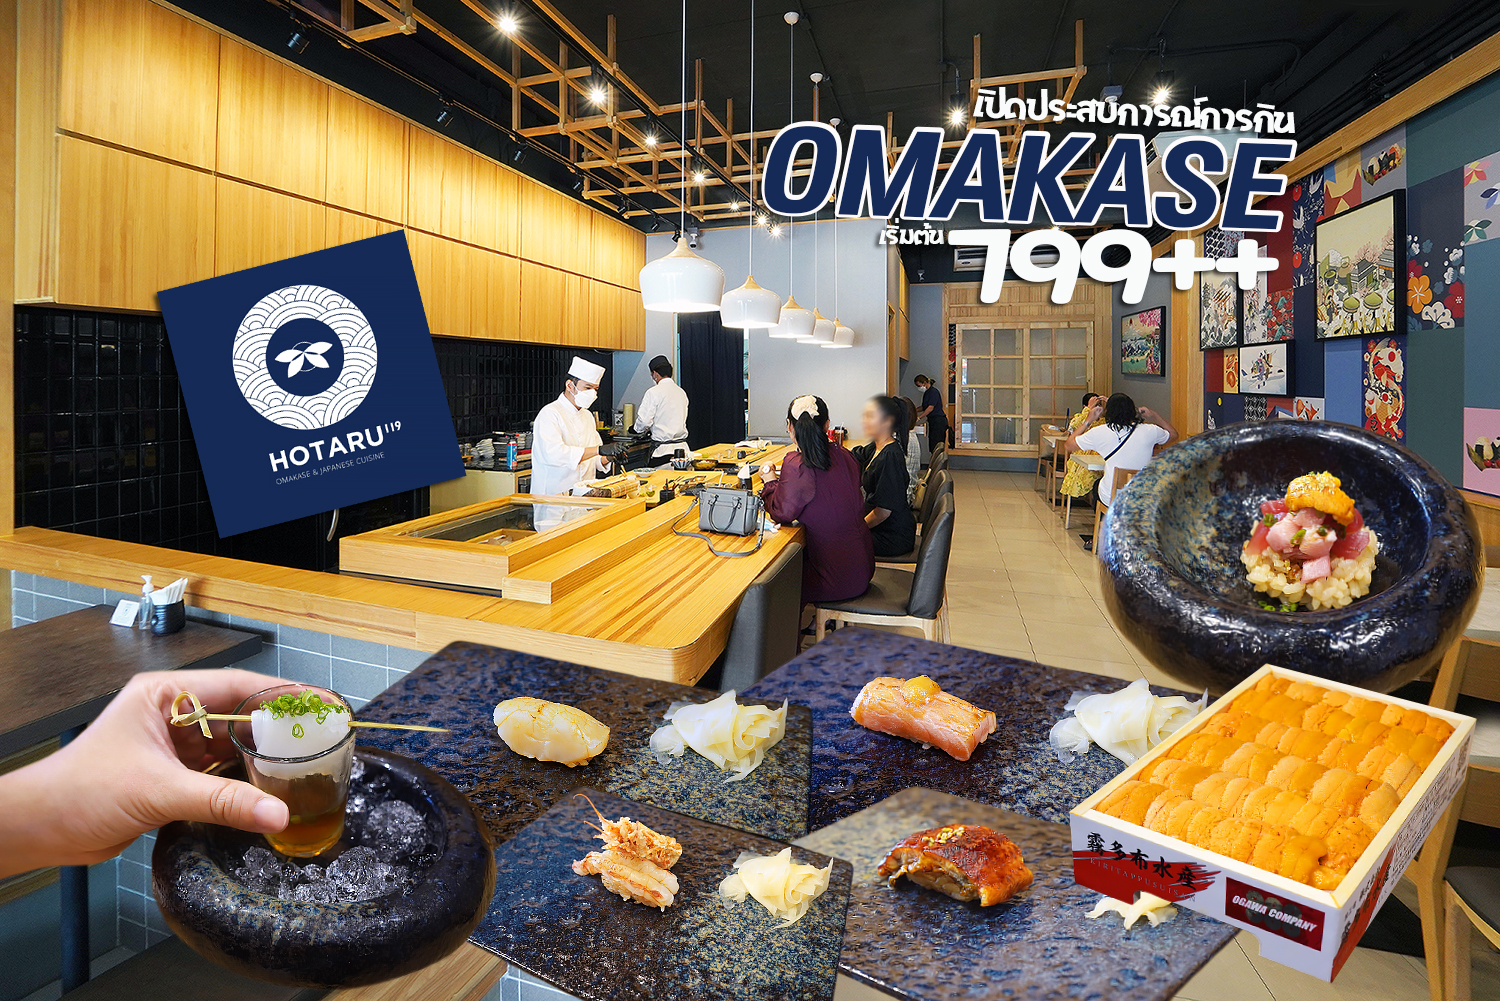 Hotaru 119 Omakase and Japanese Cuisine 0